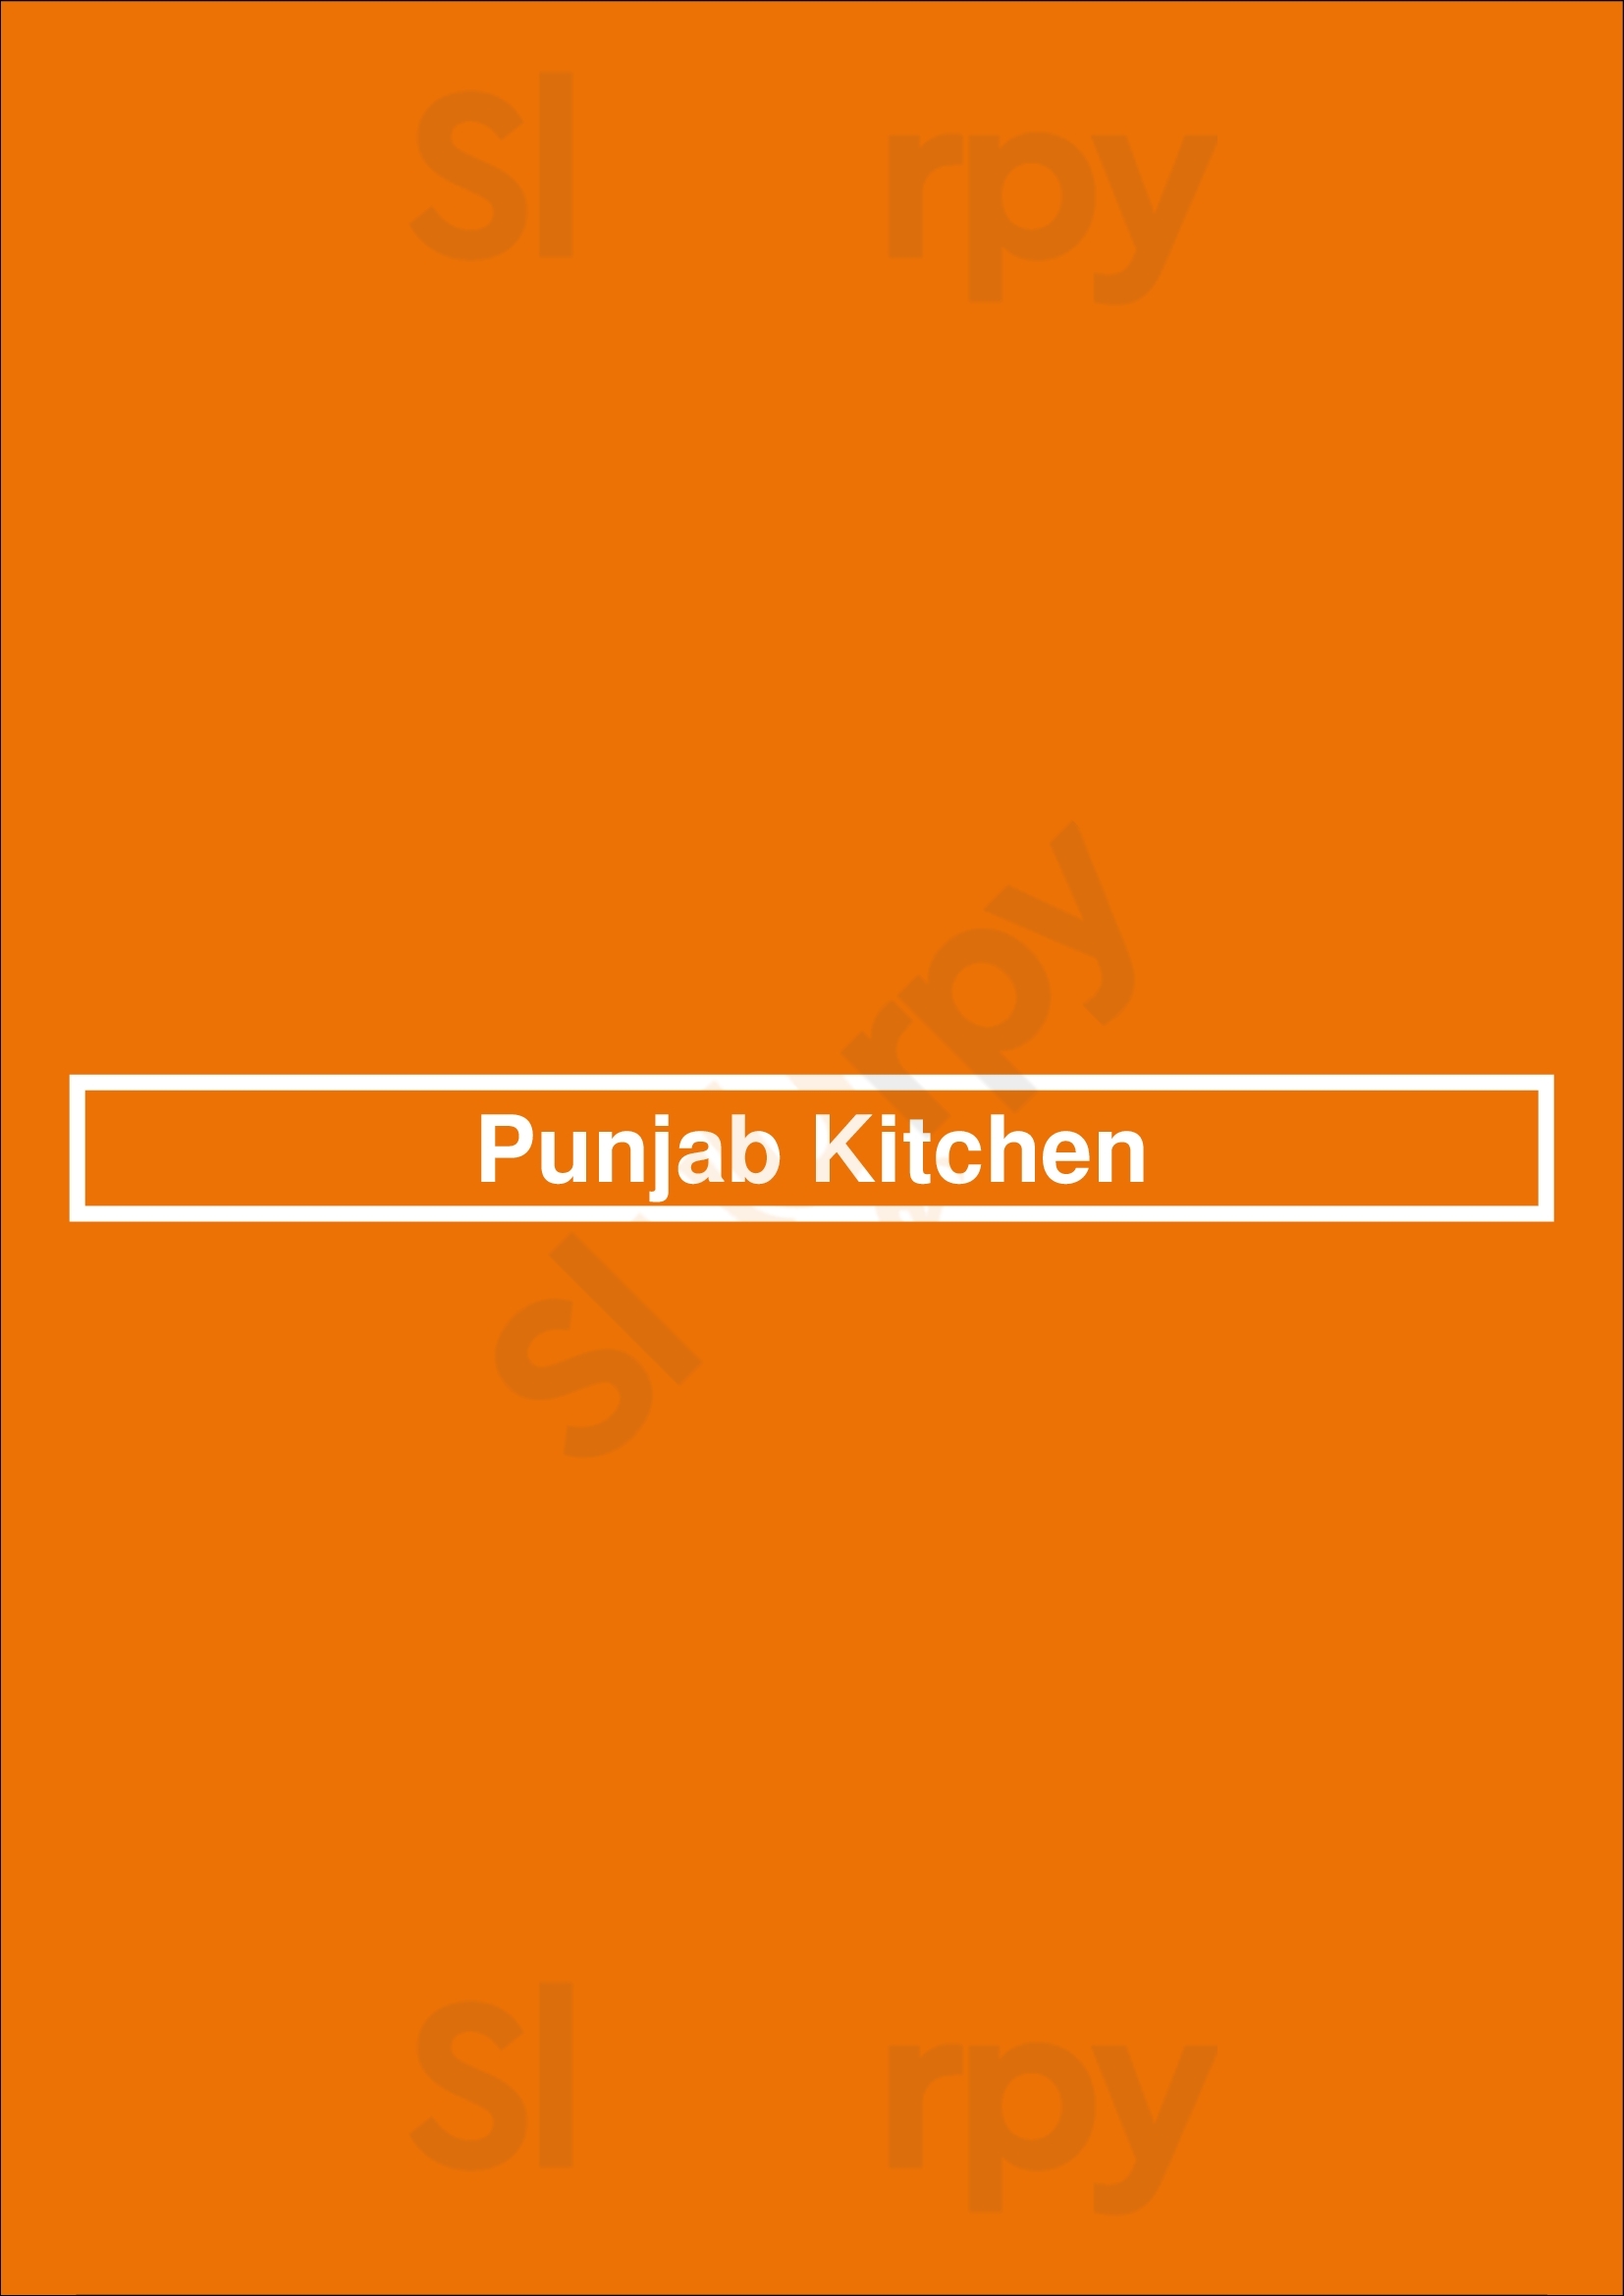 Punjab Kitchen Kissimmee Menu - 1